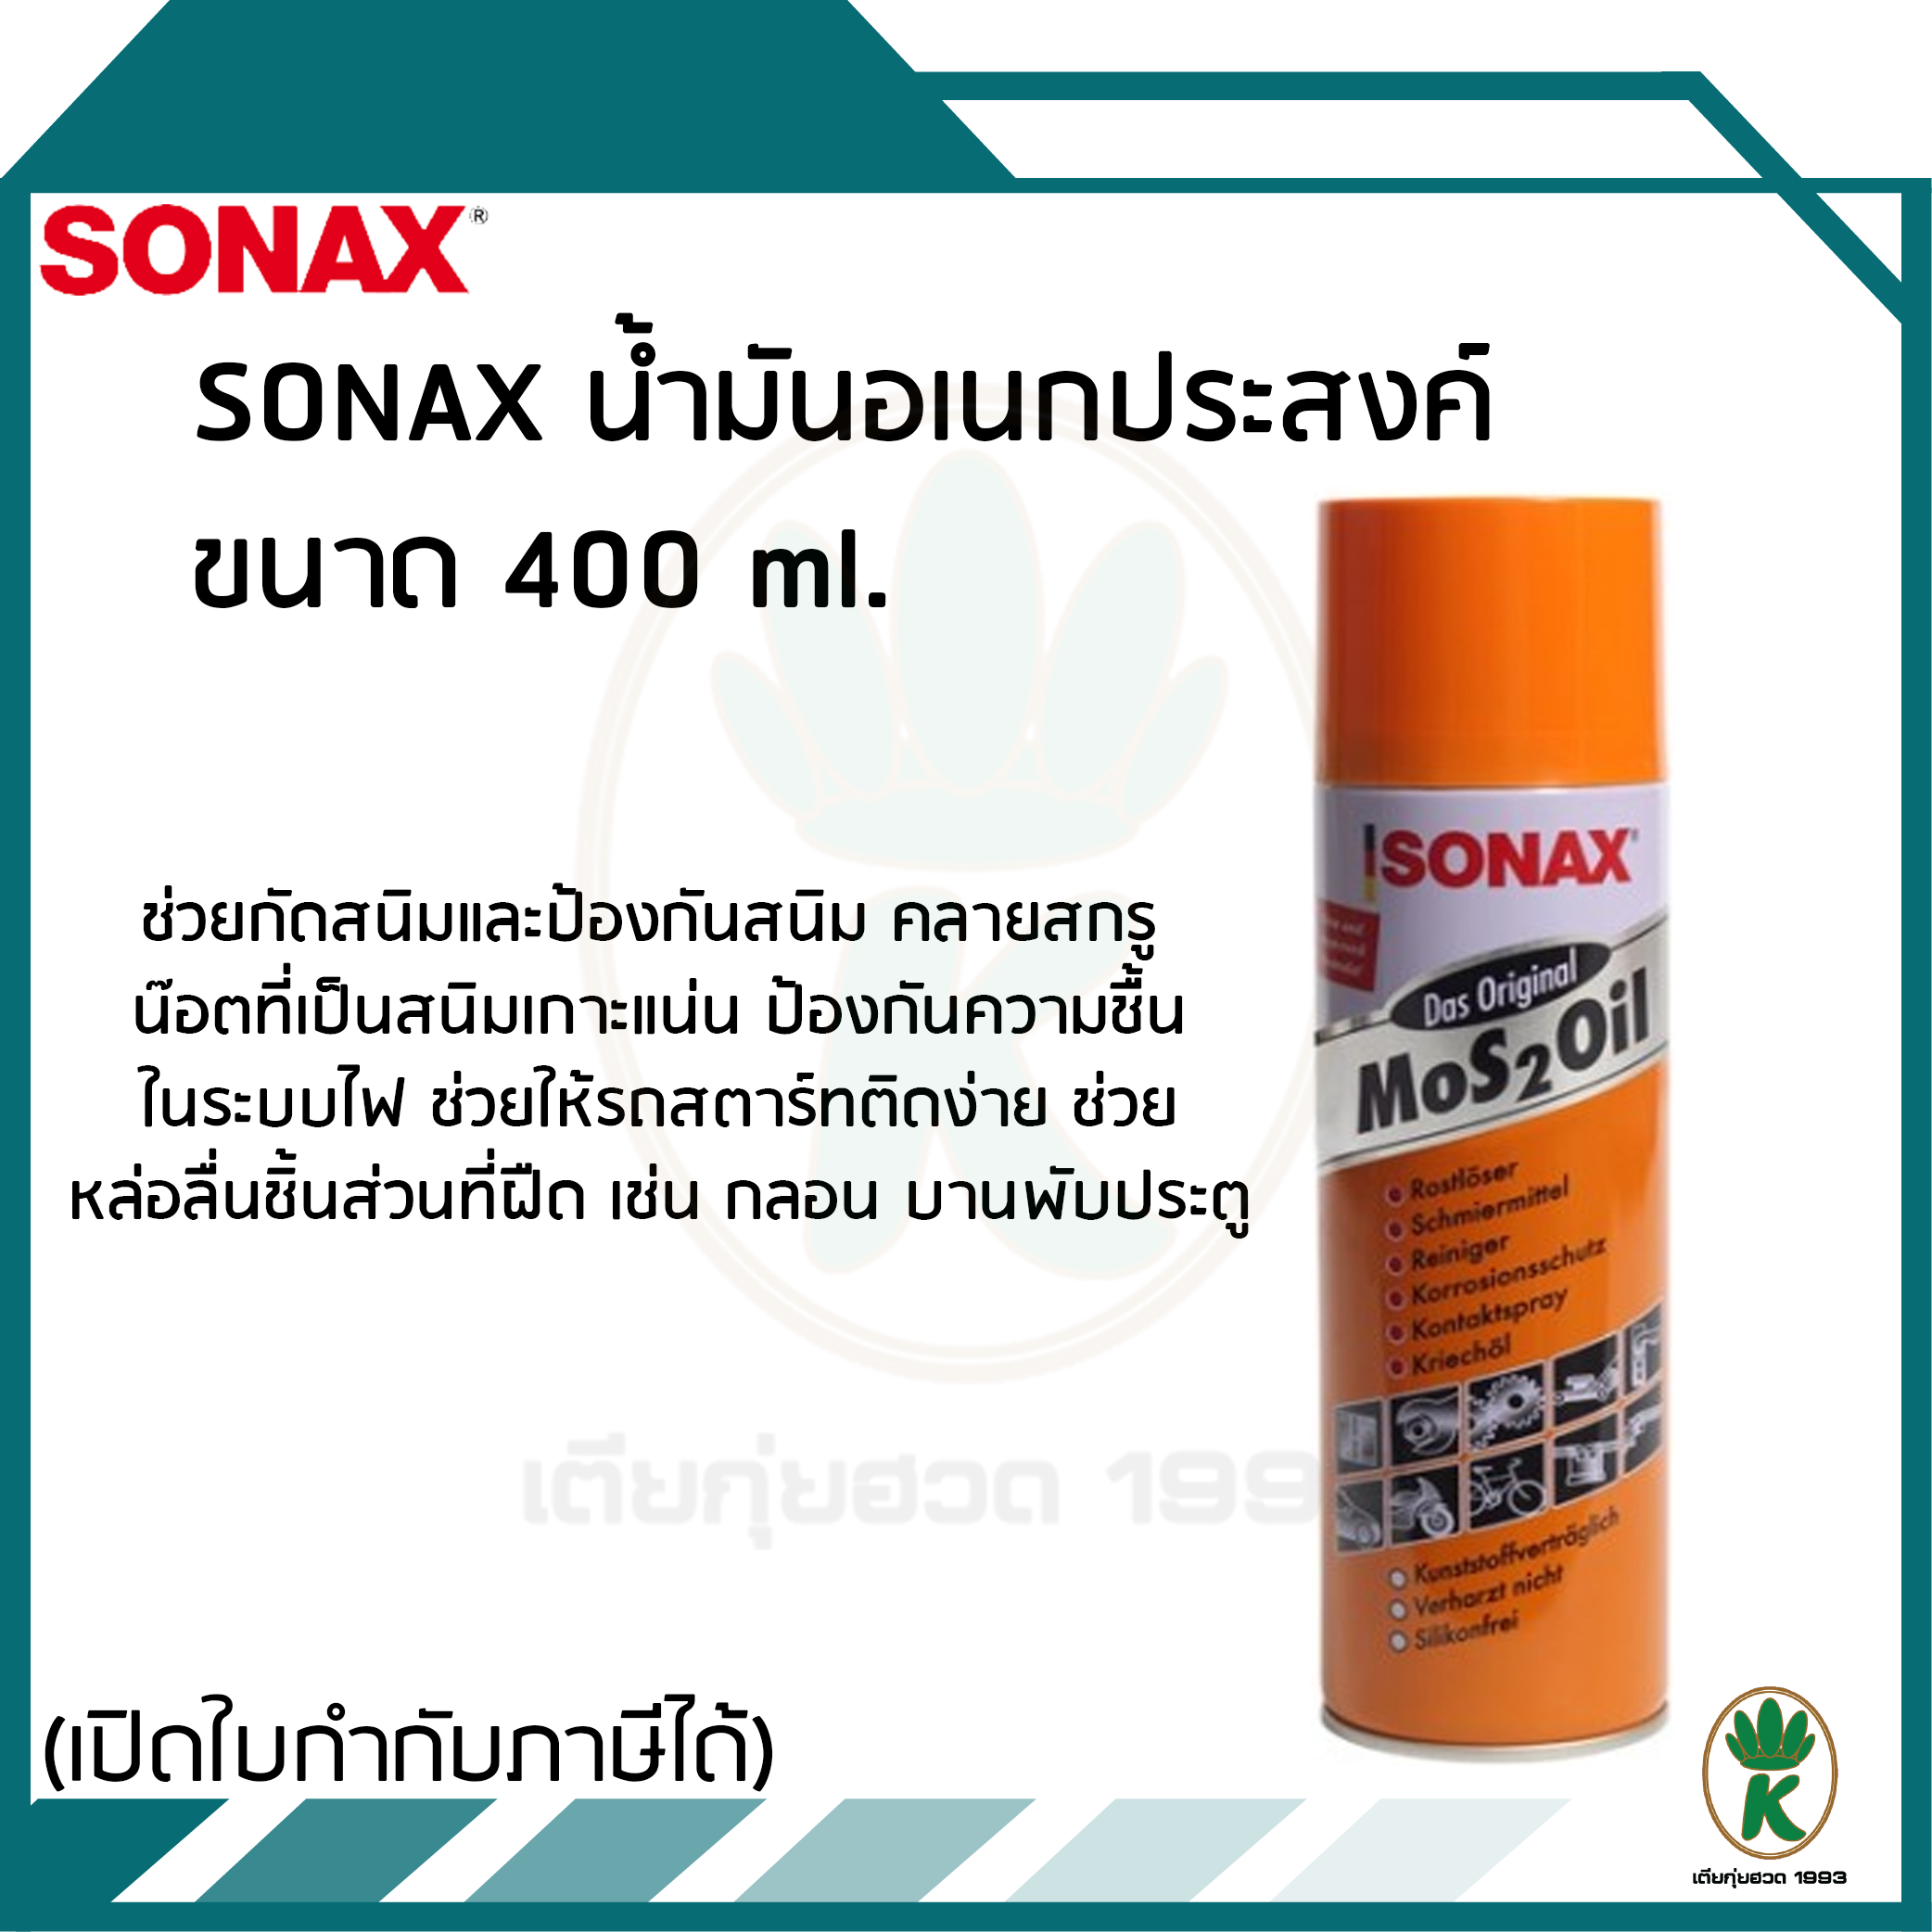 Sonax น้ำมันหล่อลื่น คลายสนิม ป้องกันสนิม น้ำมันอเนกประสงค์ทั่วไป ขนาด 400 ml